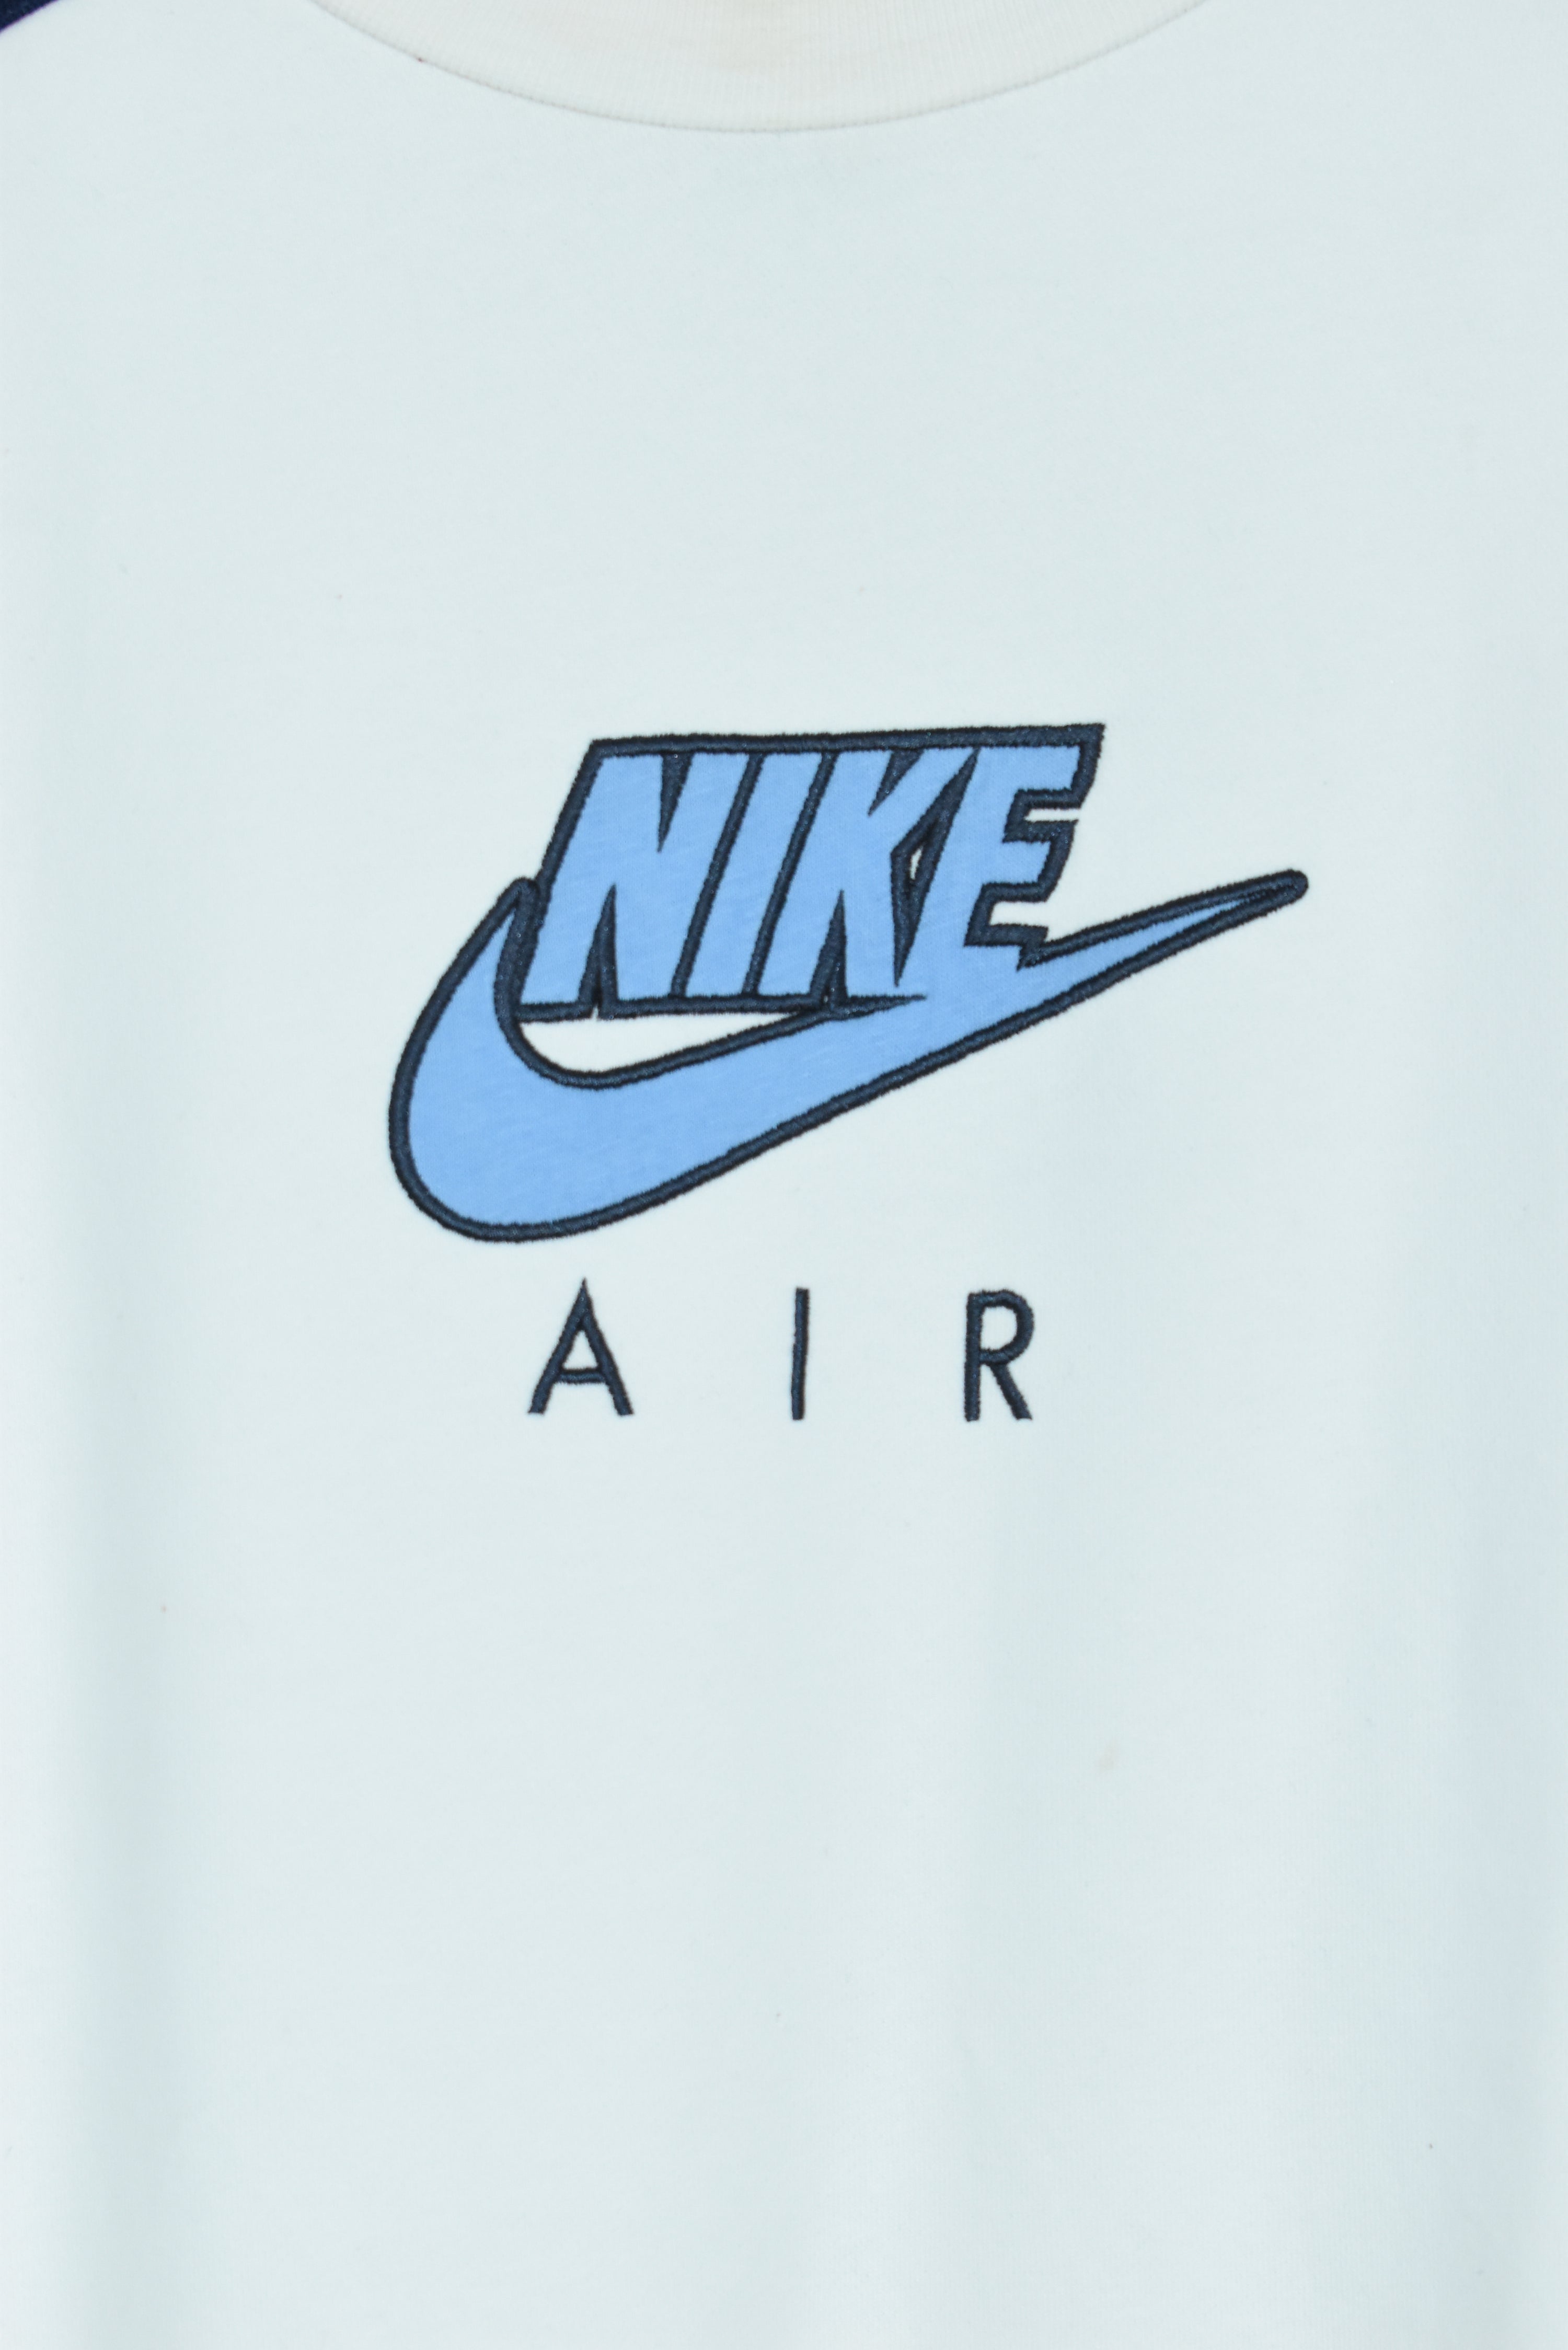 Vintage Nike Air Embroidery Sweatshirt Large